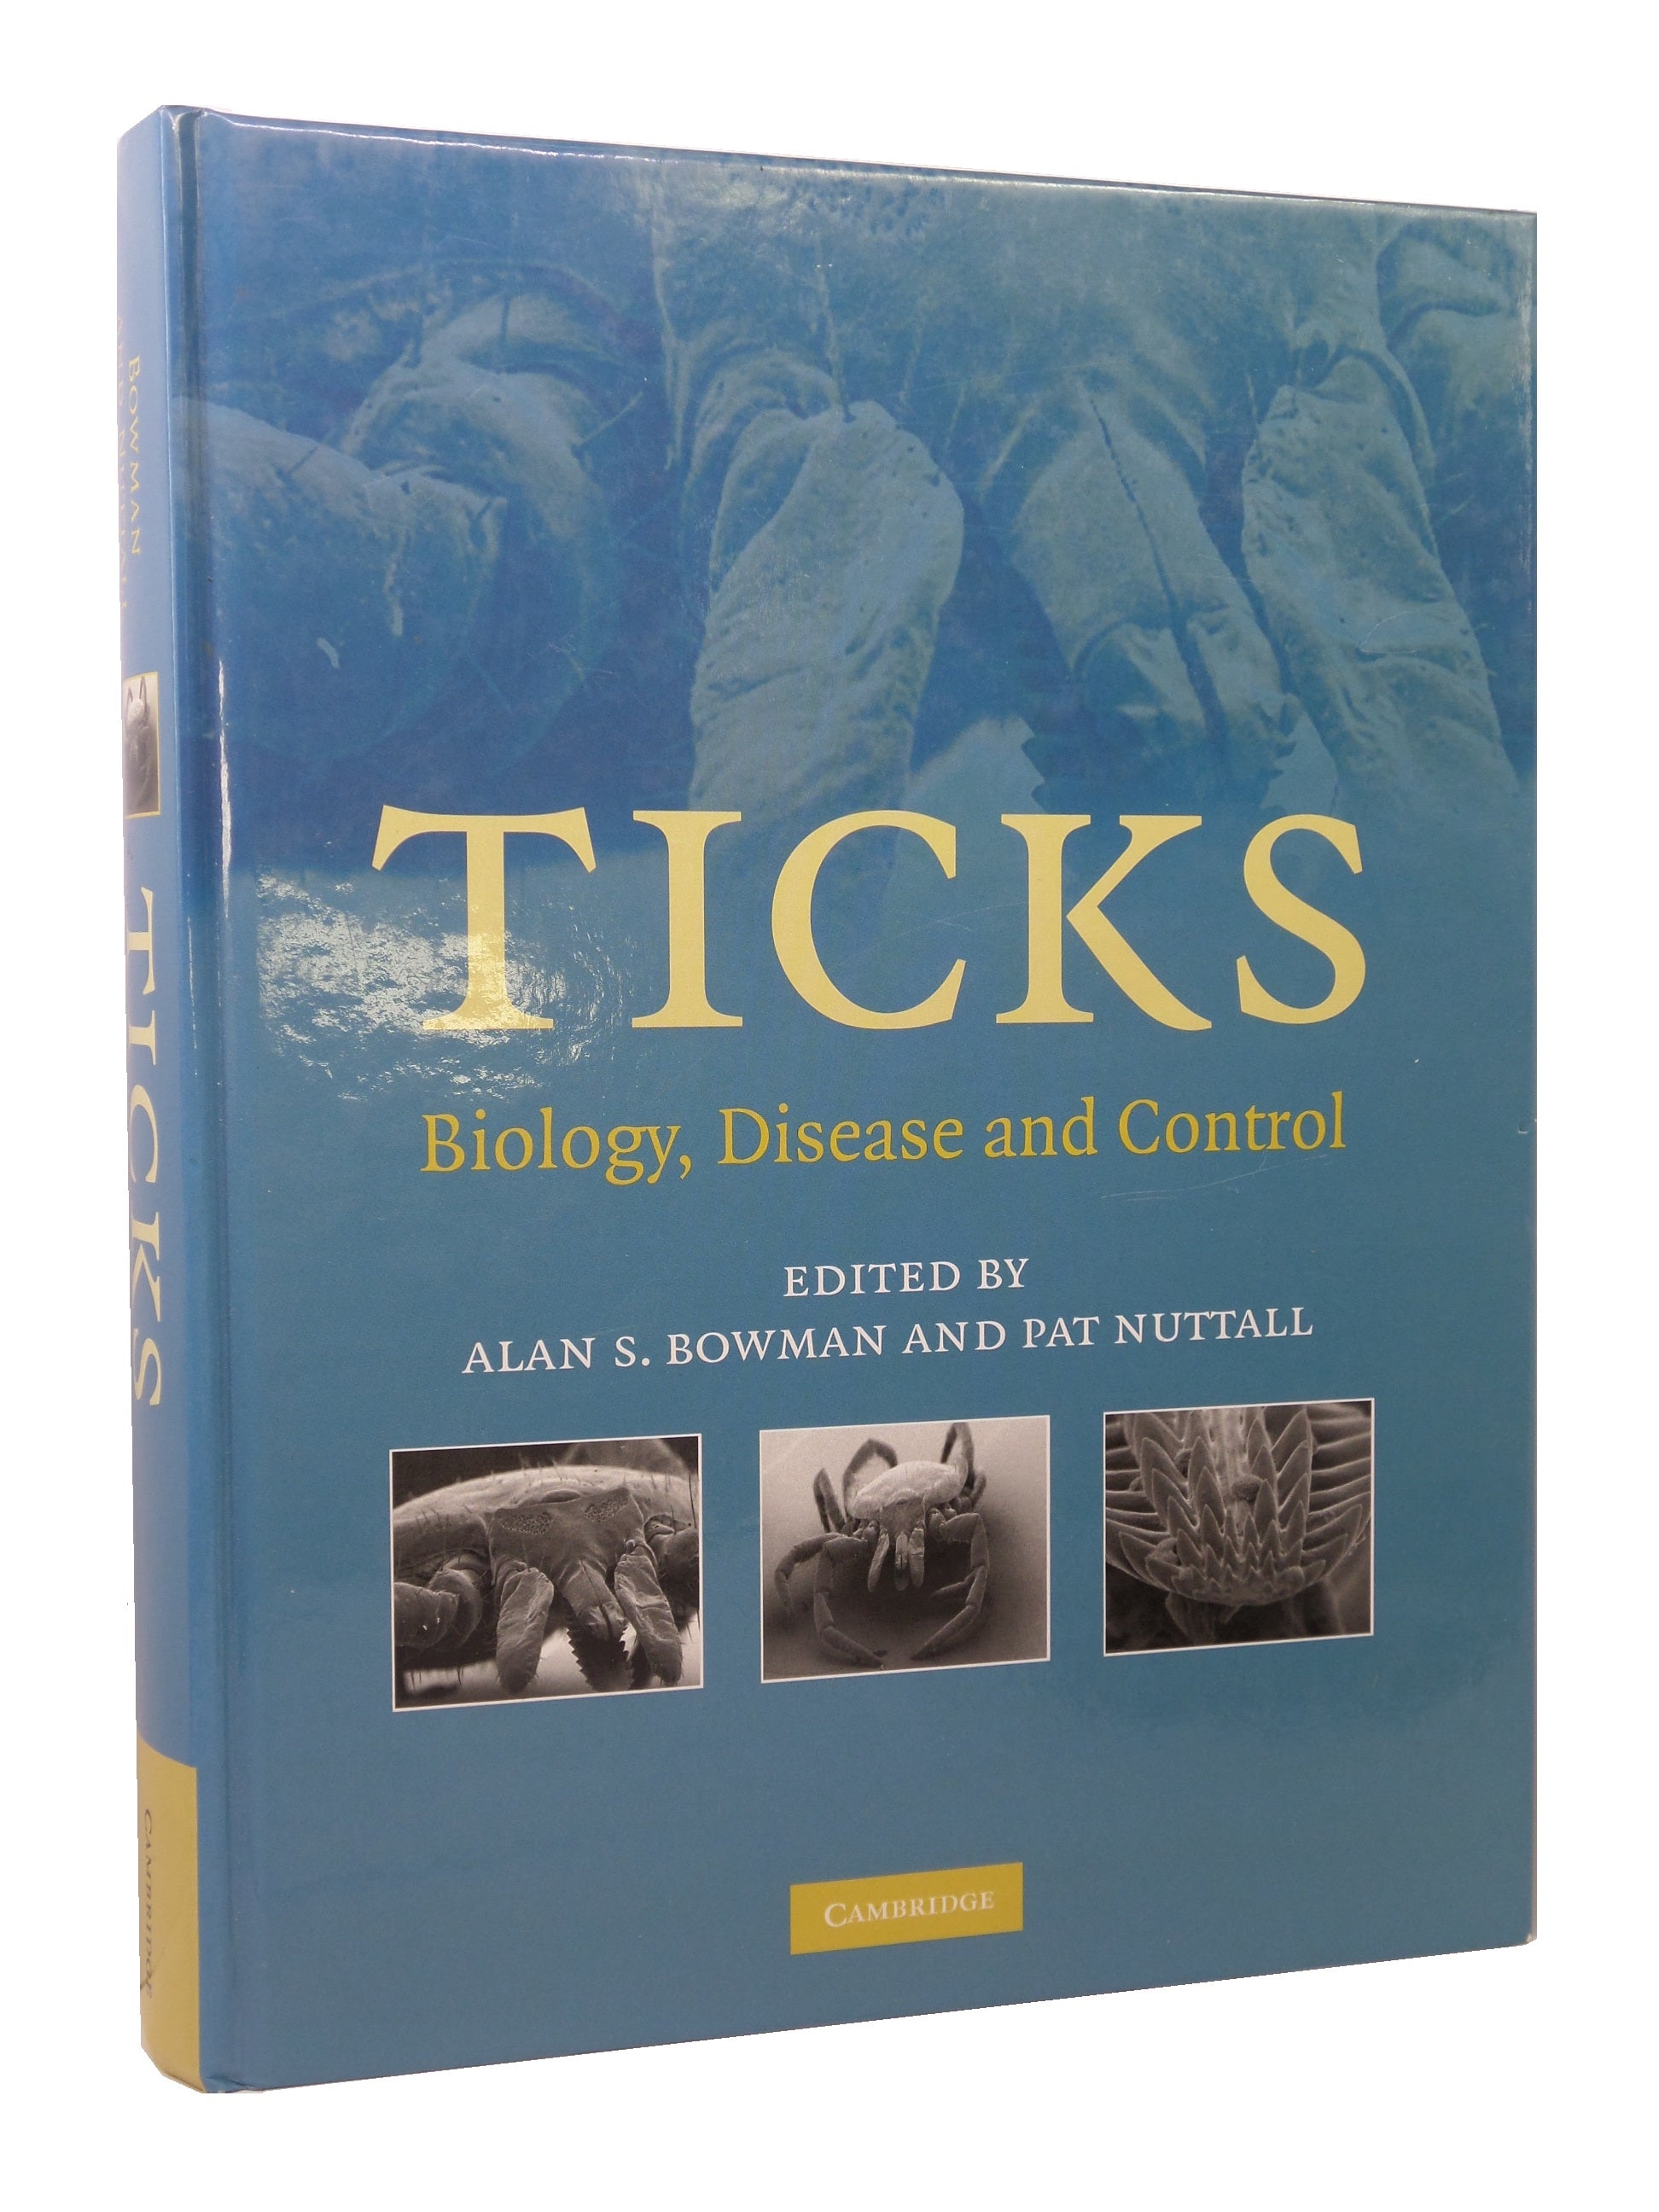 TICKS: BIOLOGY, DISEASE AND CONTROL EDITED BY ALAN BOWMAN 2008 HARDBACK